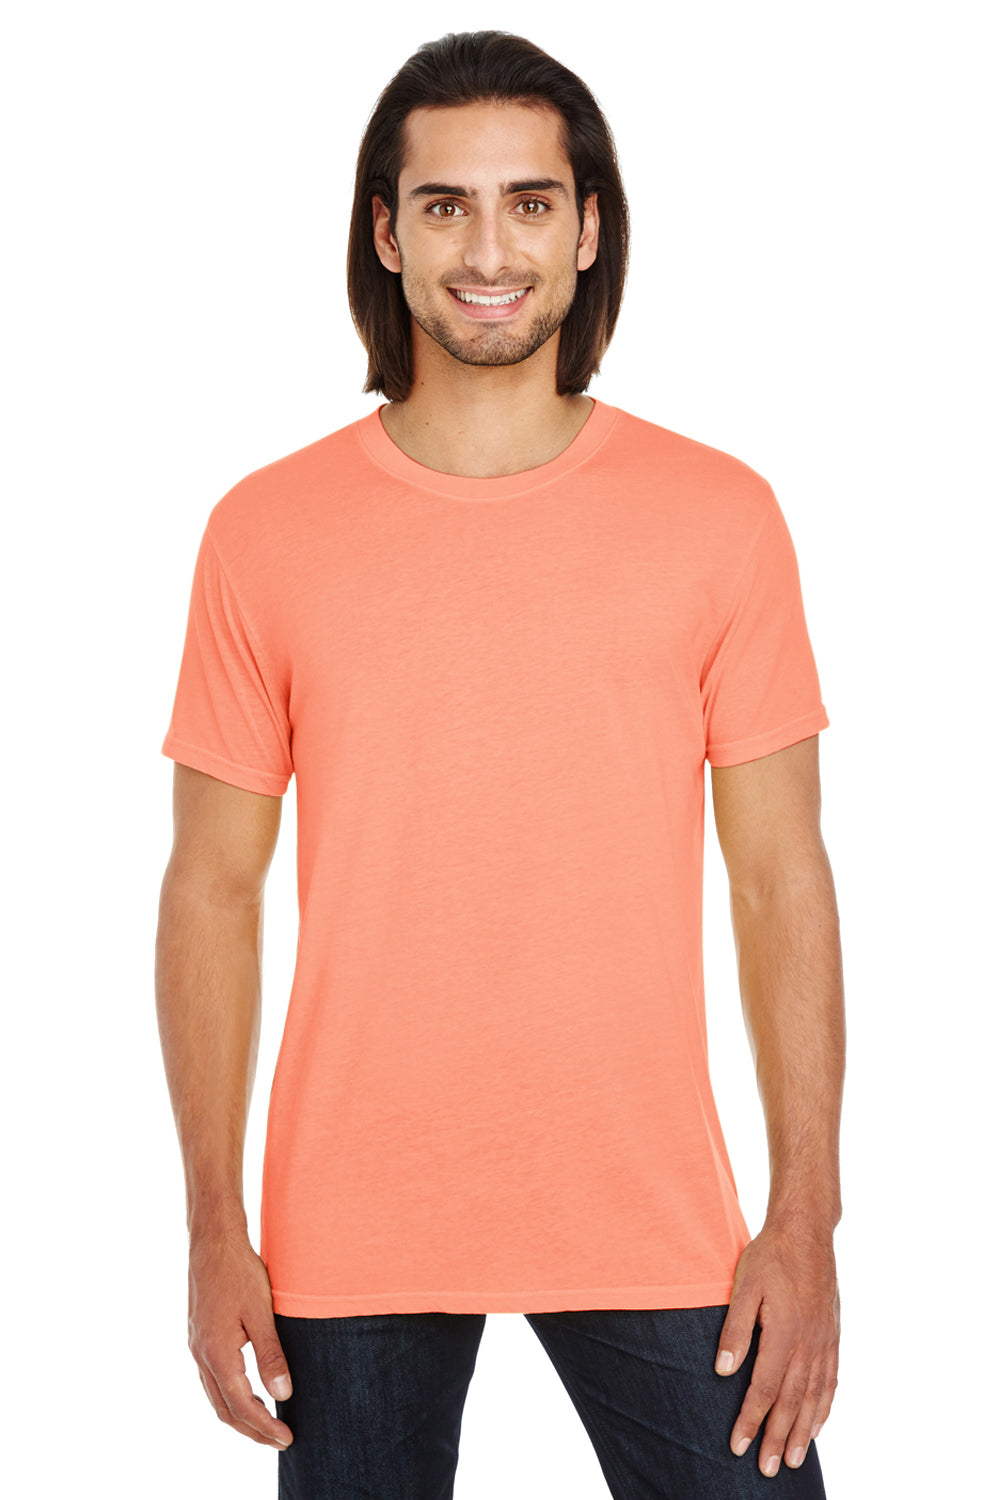 Threadfast Apparel 130A Mens Short Sleeve Crewneck T-Shirt Tangerine Orange Front